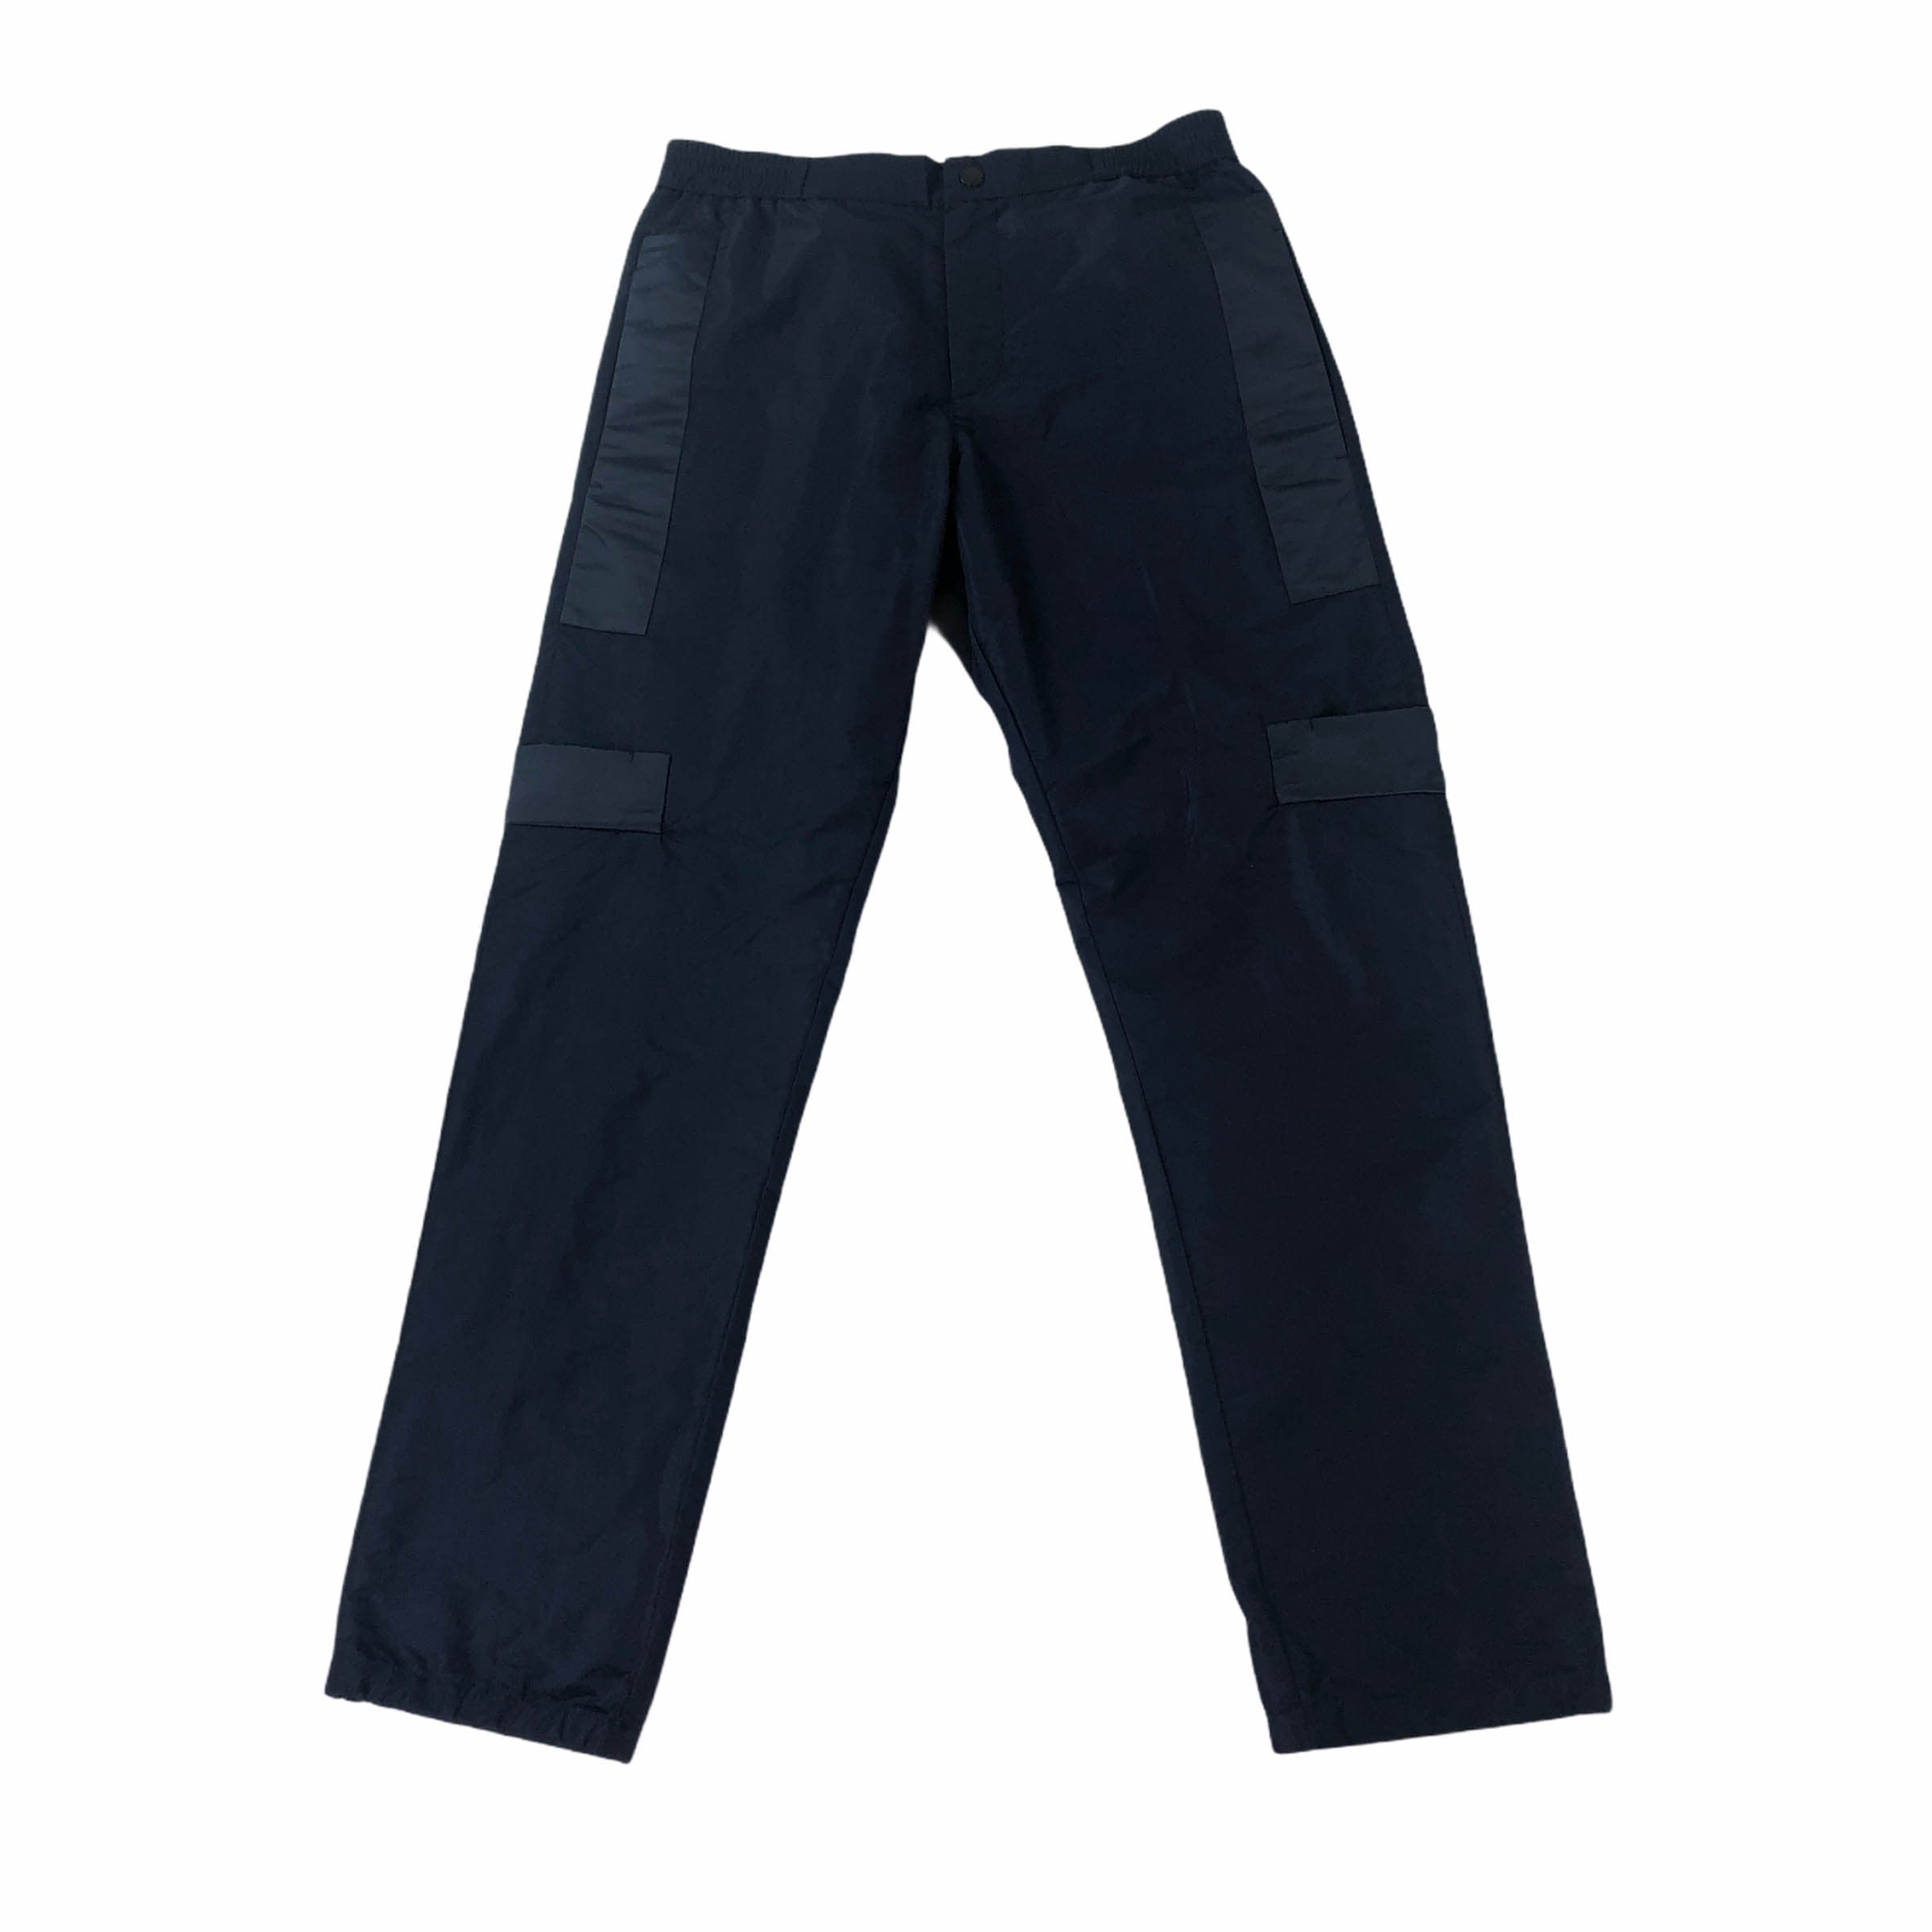 [Alexander Wang] Polyester Navy Track Pants - Size XS